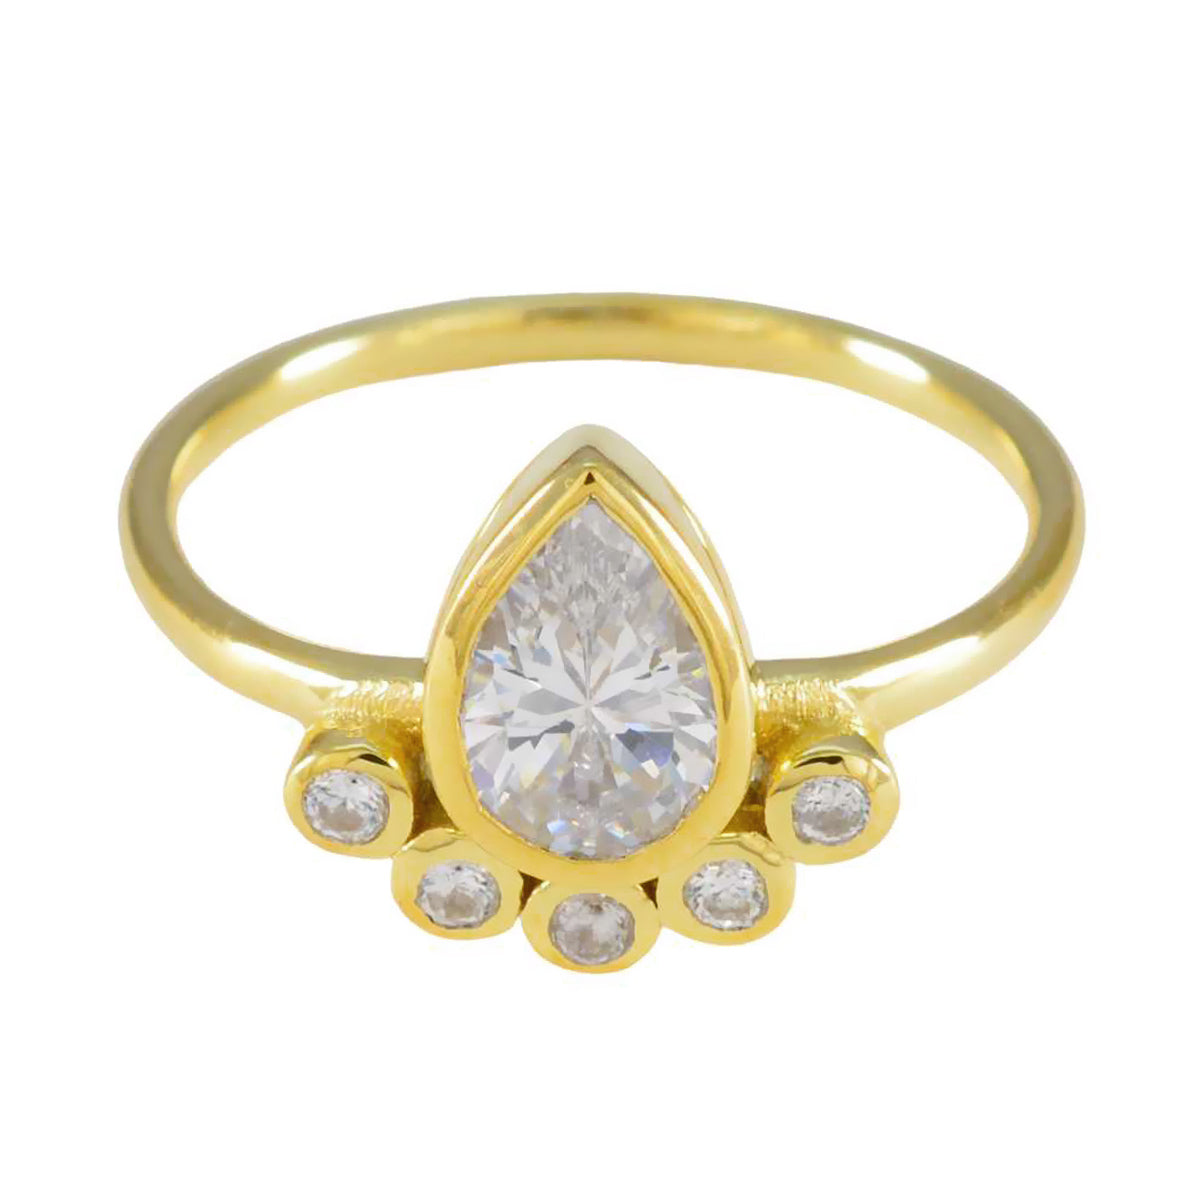 Riyo Jaipur Silver Ring With Yellow Gold Plating White CZ Stone Pear Shape Bezel Setting Ring